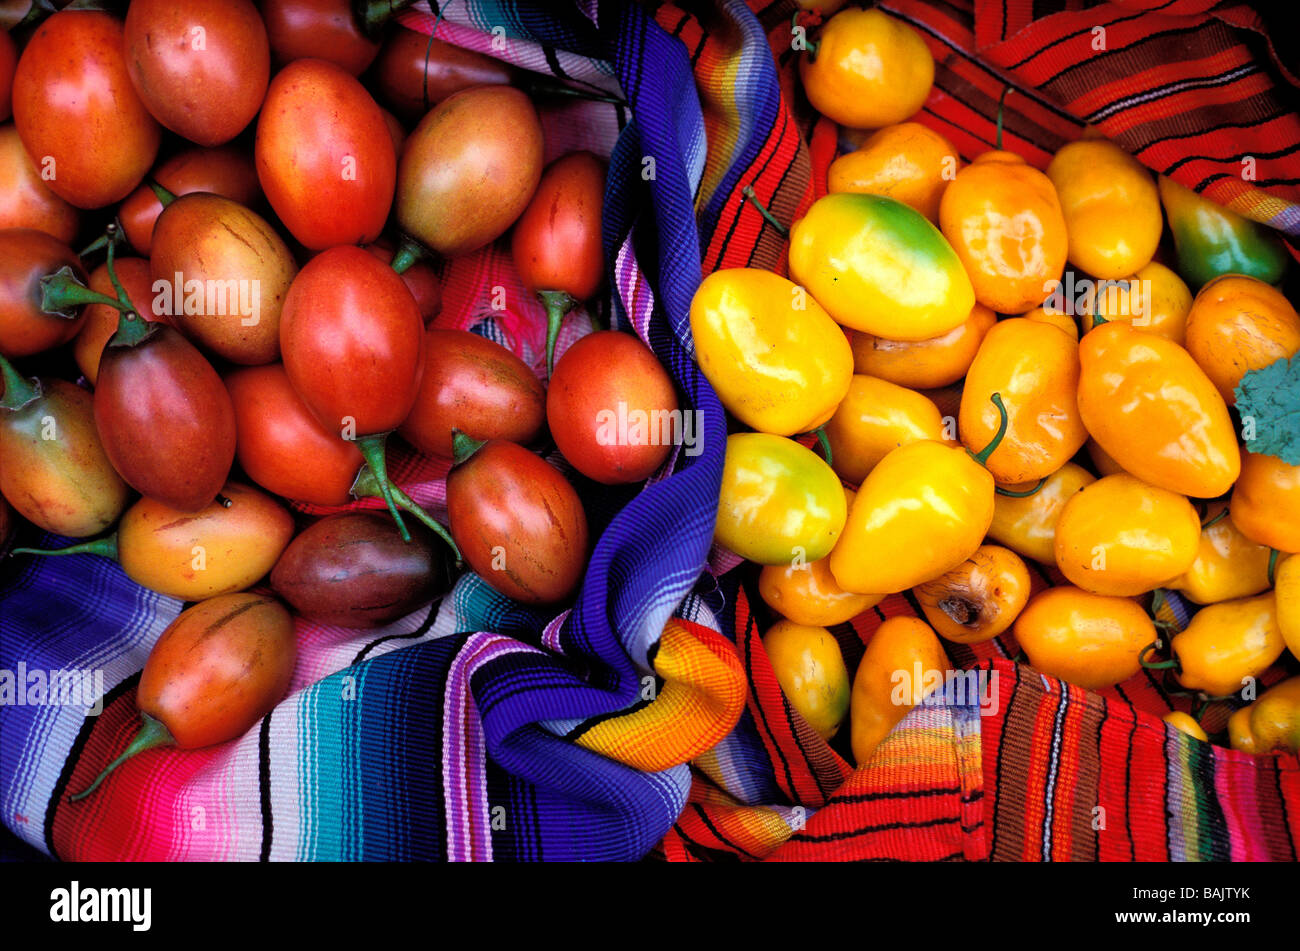 Guatemala, Quiche Department, Chichicastenango, Sunday market, peppers Stock Photo